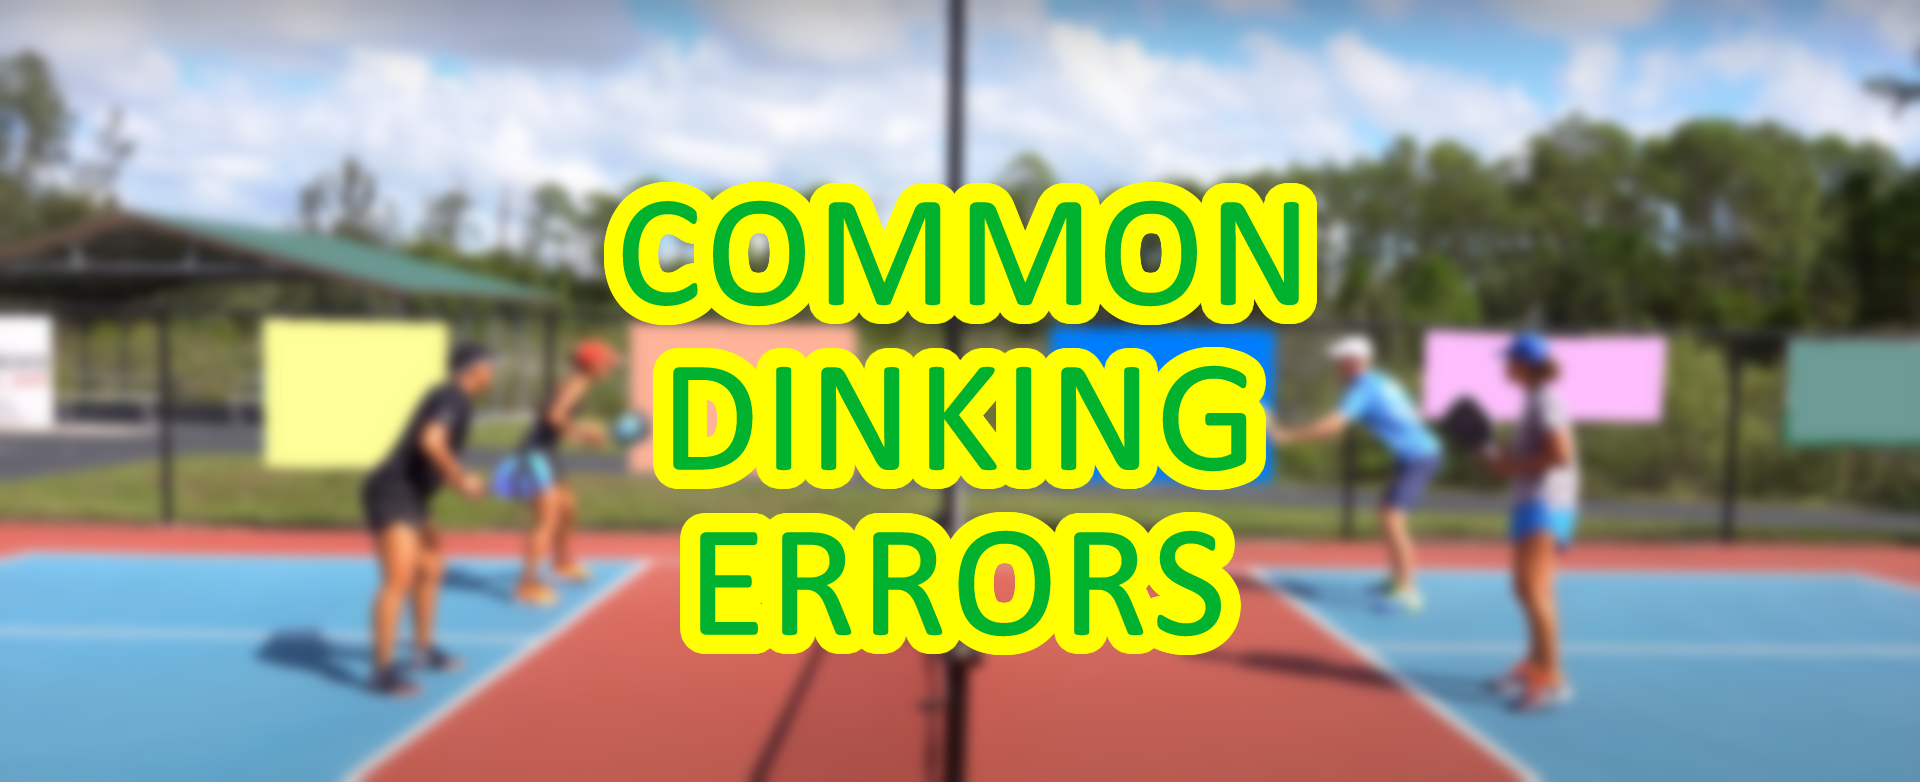 dinking errors